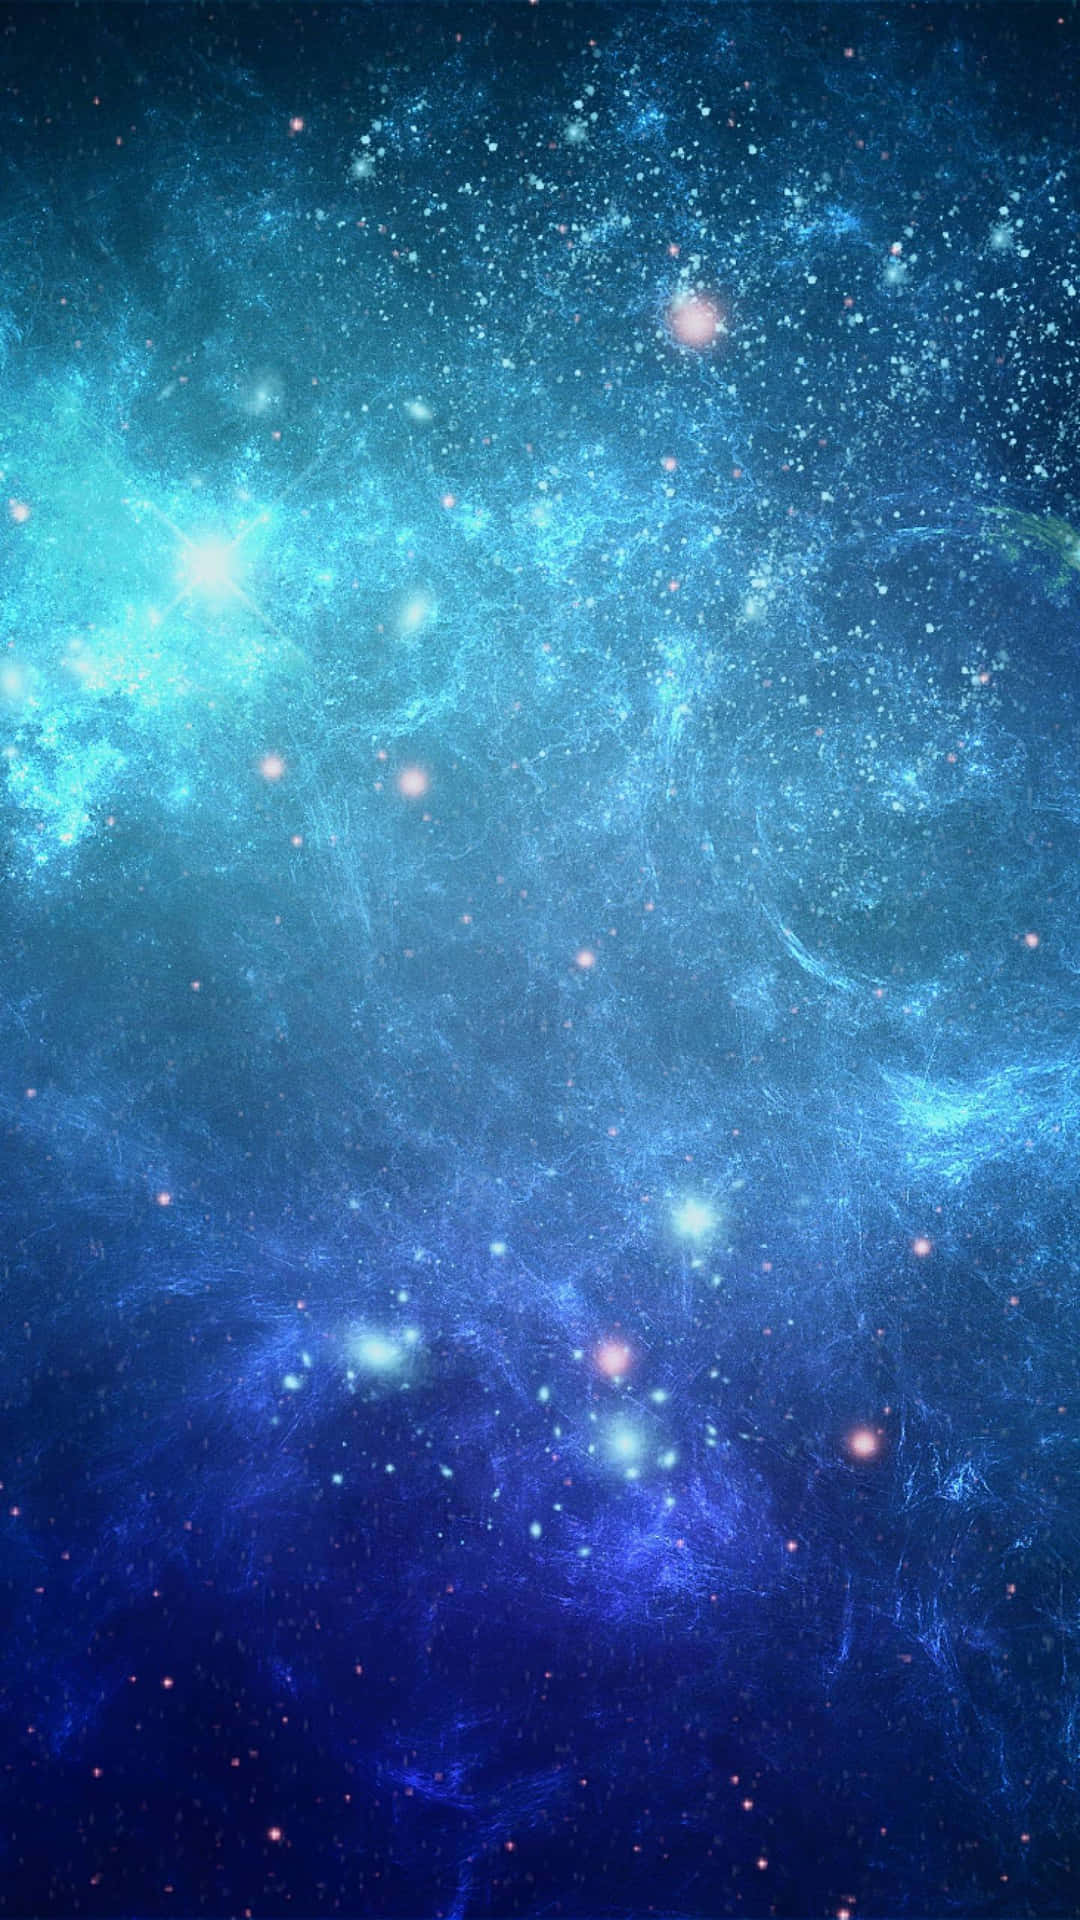 Bildgalaxhimmel Wallpaper